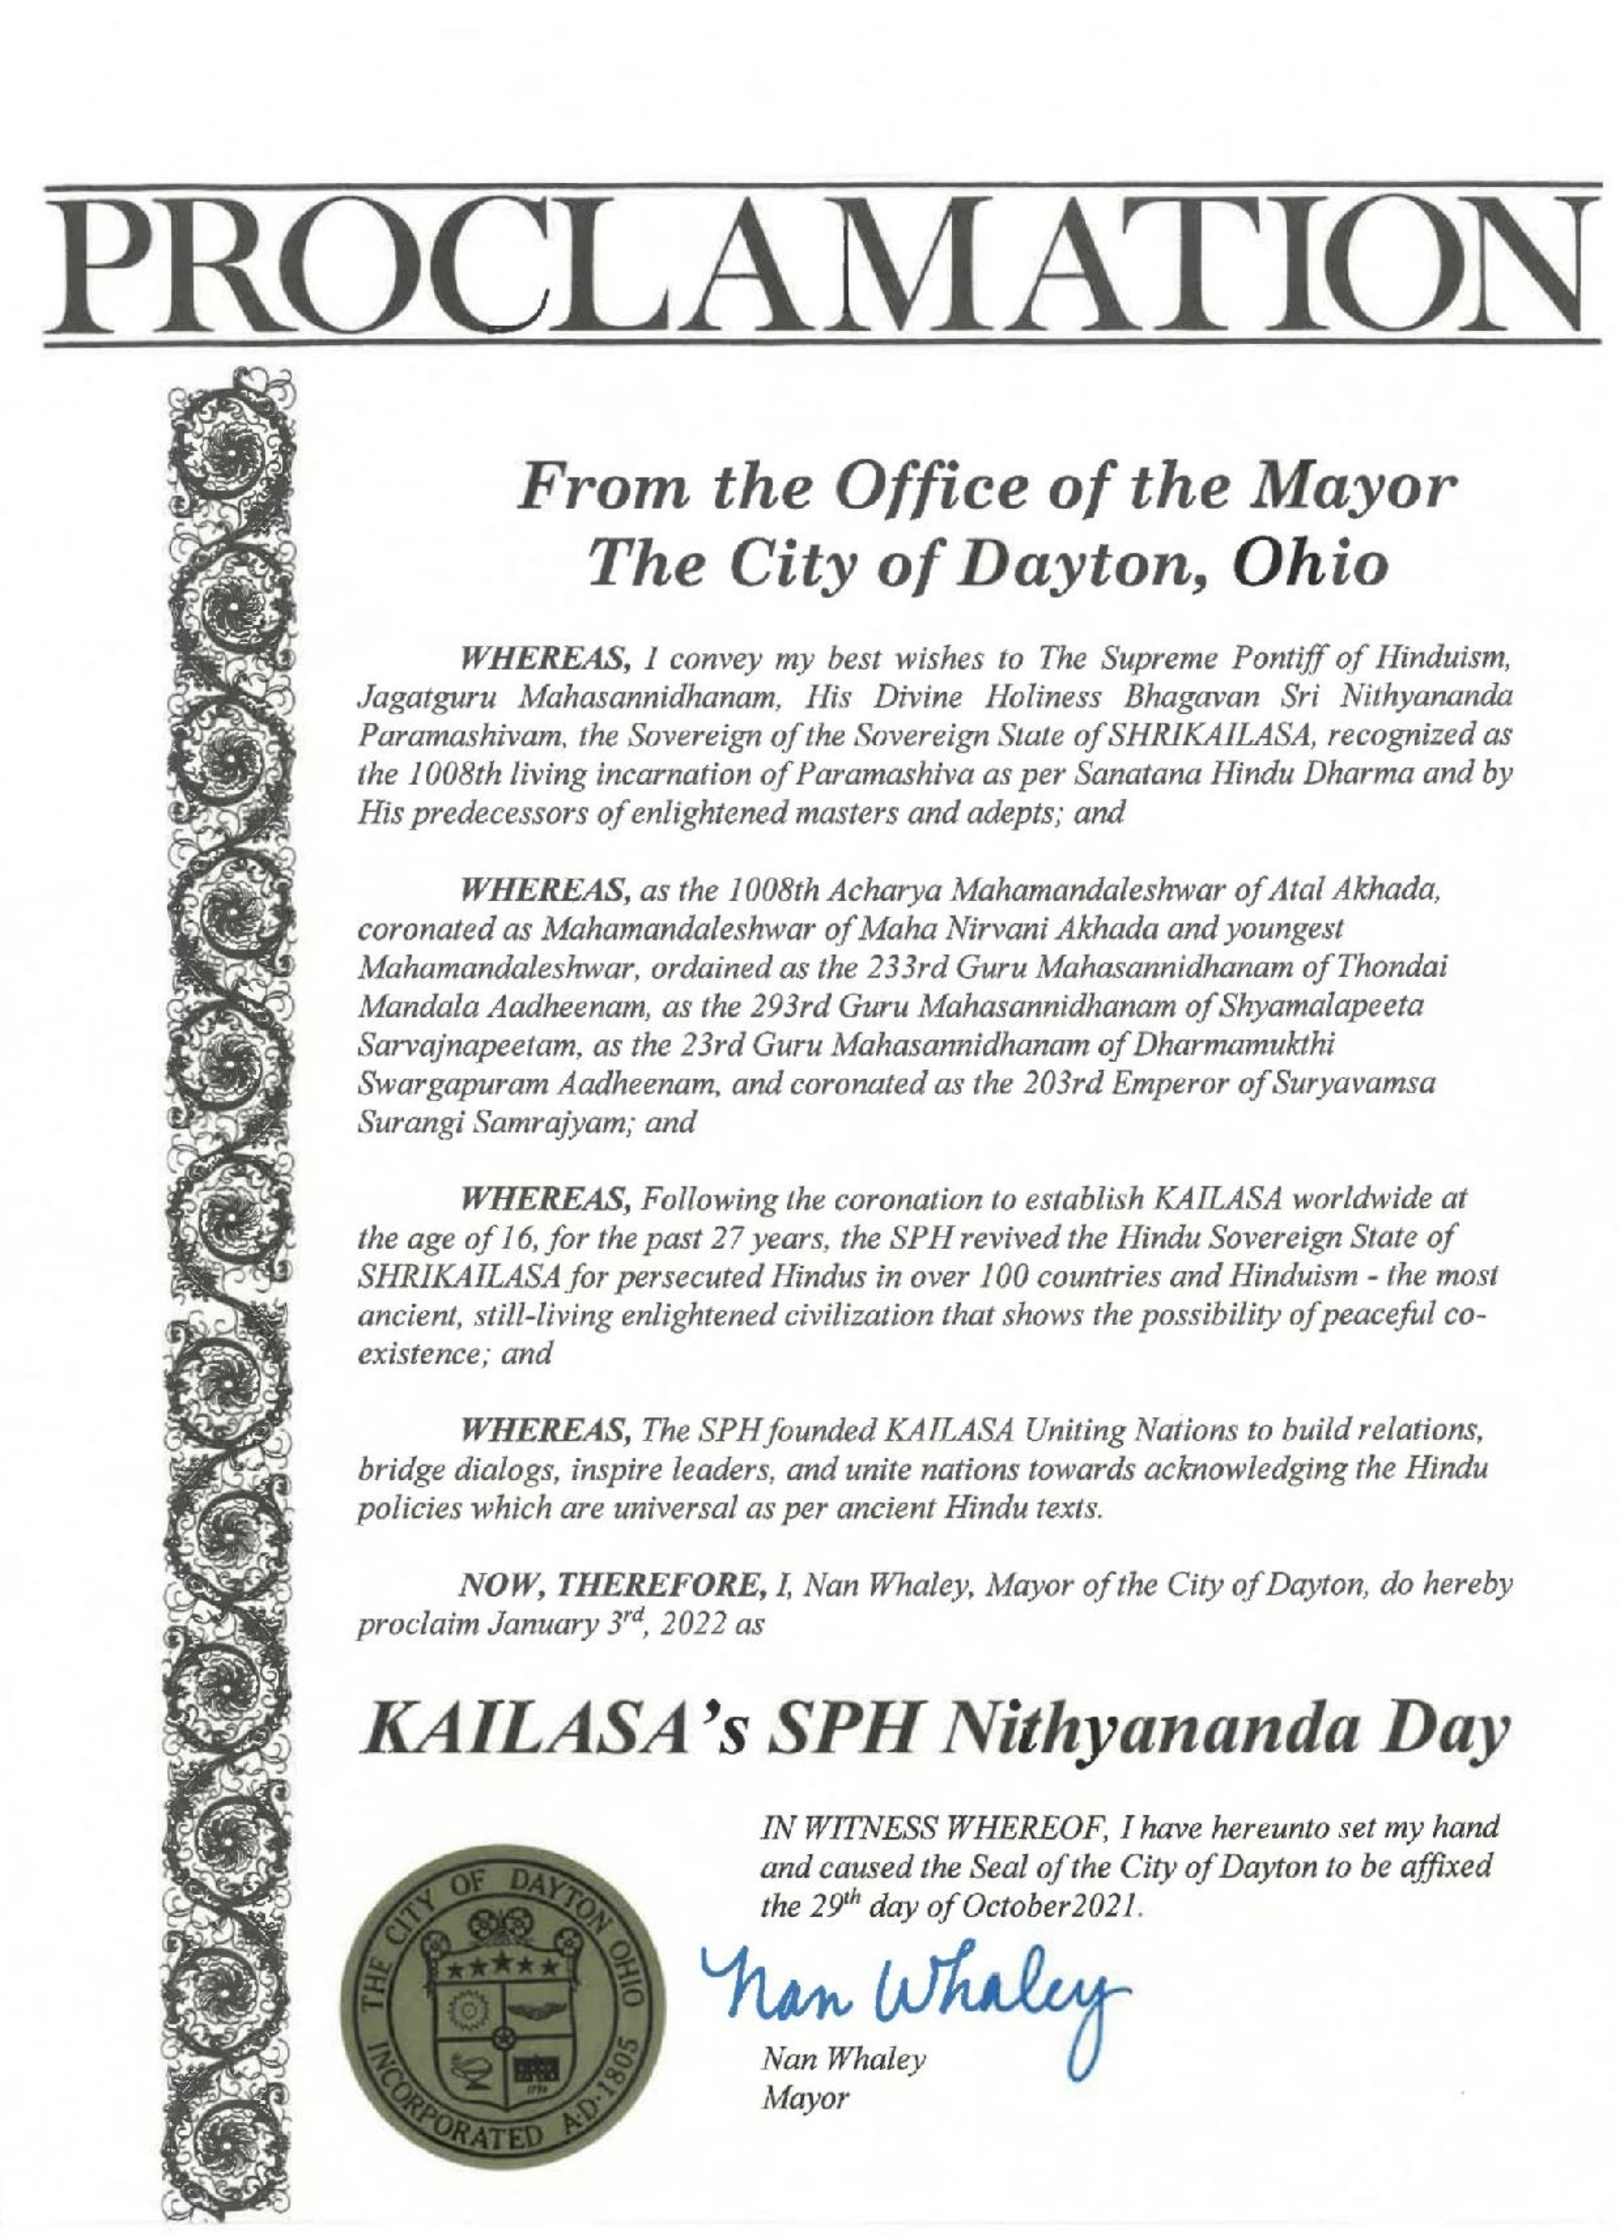 Proclamation-Dayton-Ohio-USA-mayor-nan-whatley-2021-10-29.jpg